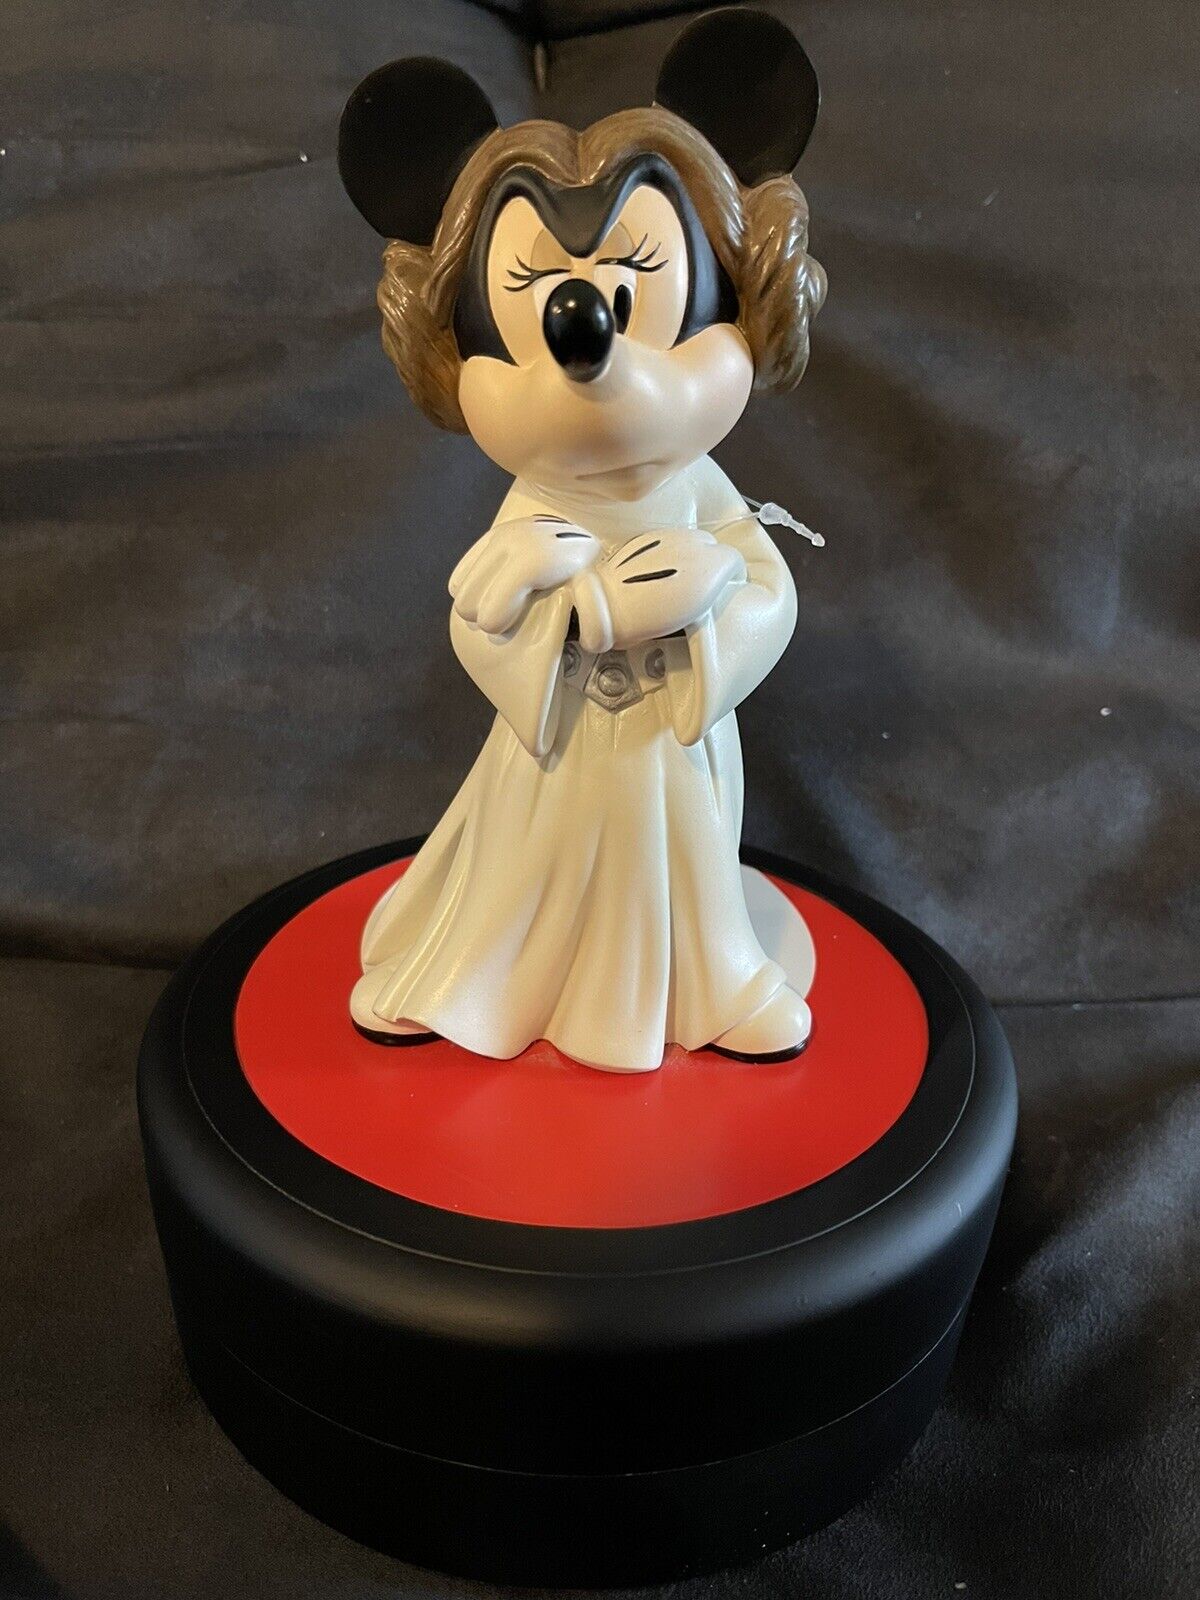 Princess Leia Minnie Disney Star Wars Weekend - Complete with Pin